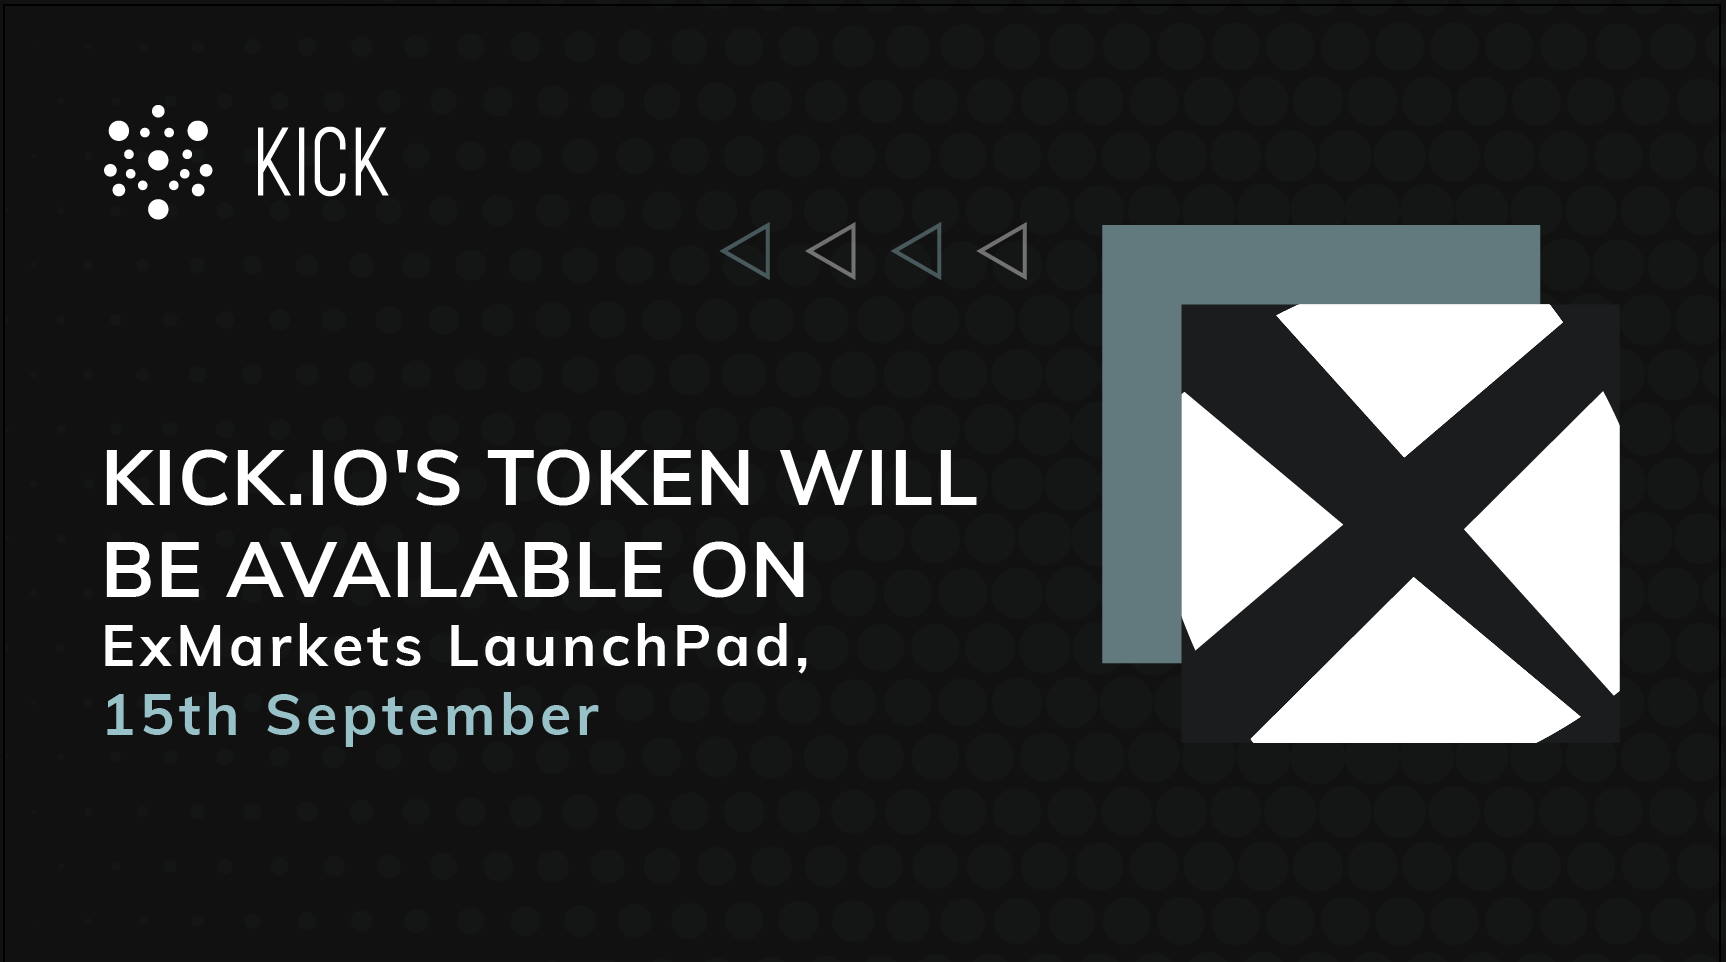 KICK.IO's Token Will Be Available on ExMarkets LaunchPad, 15th September